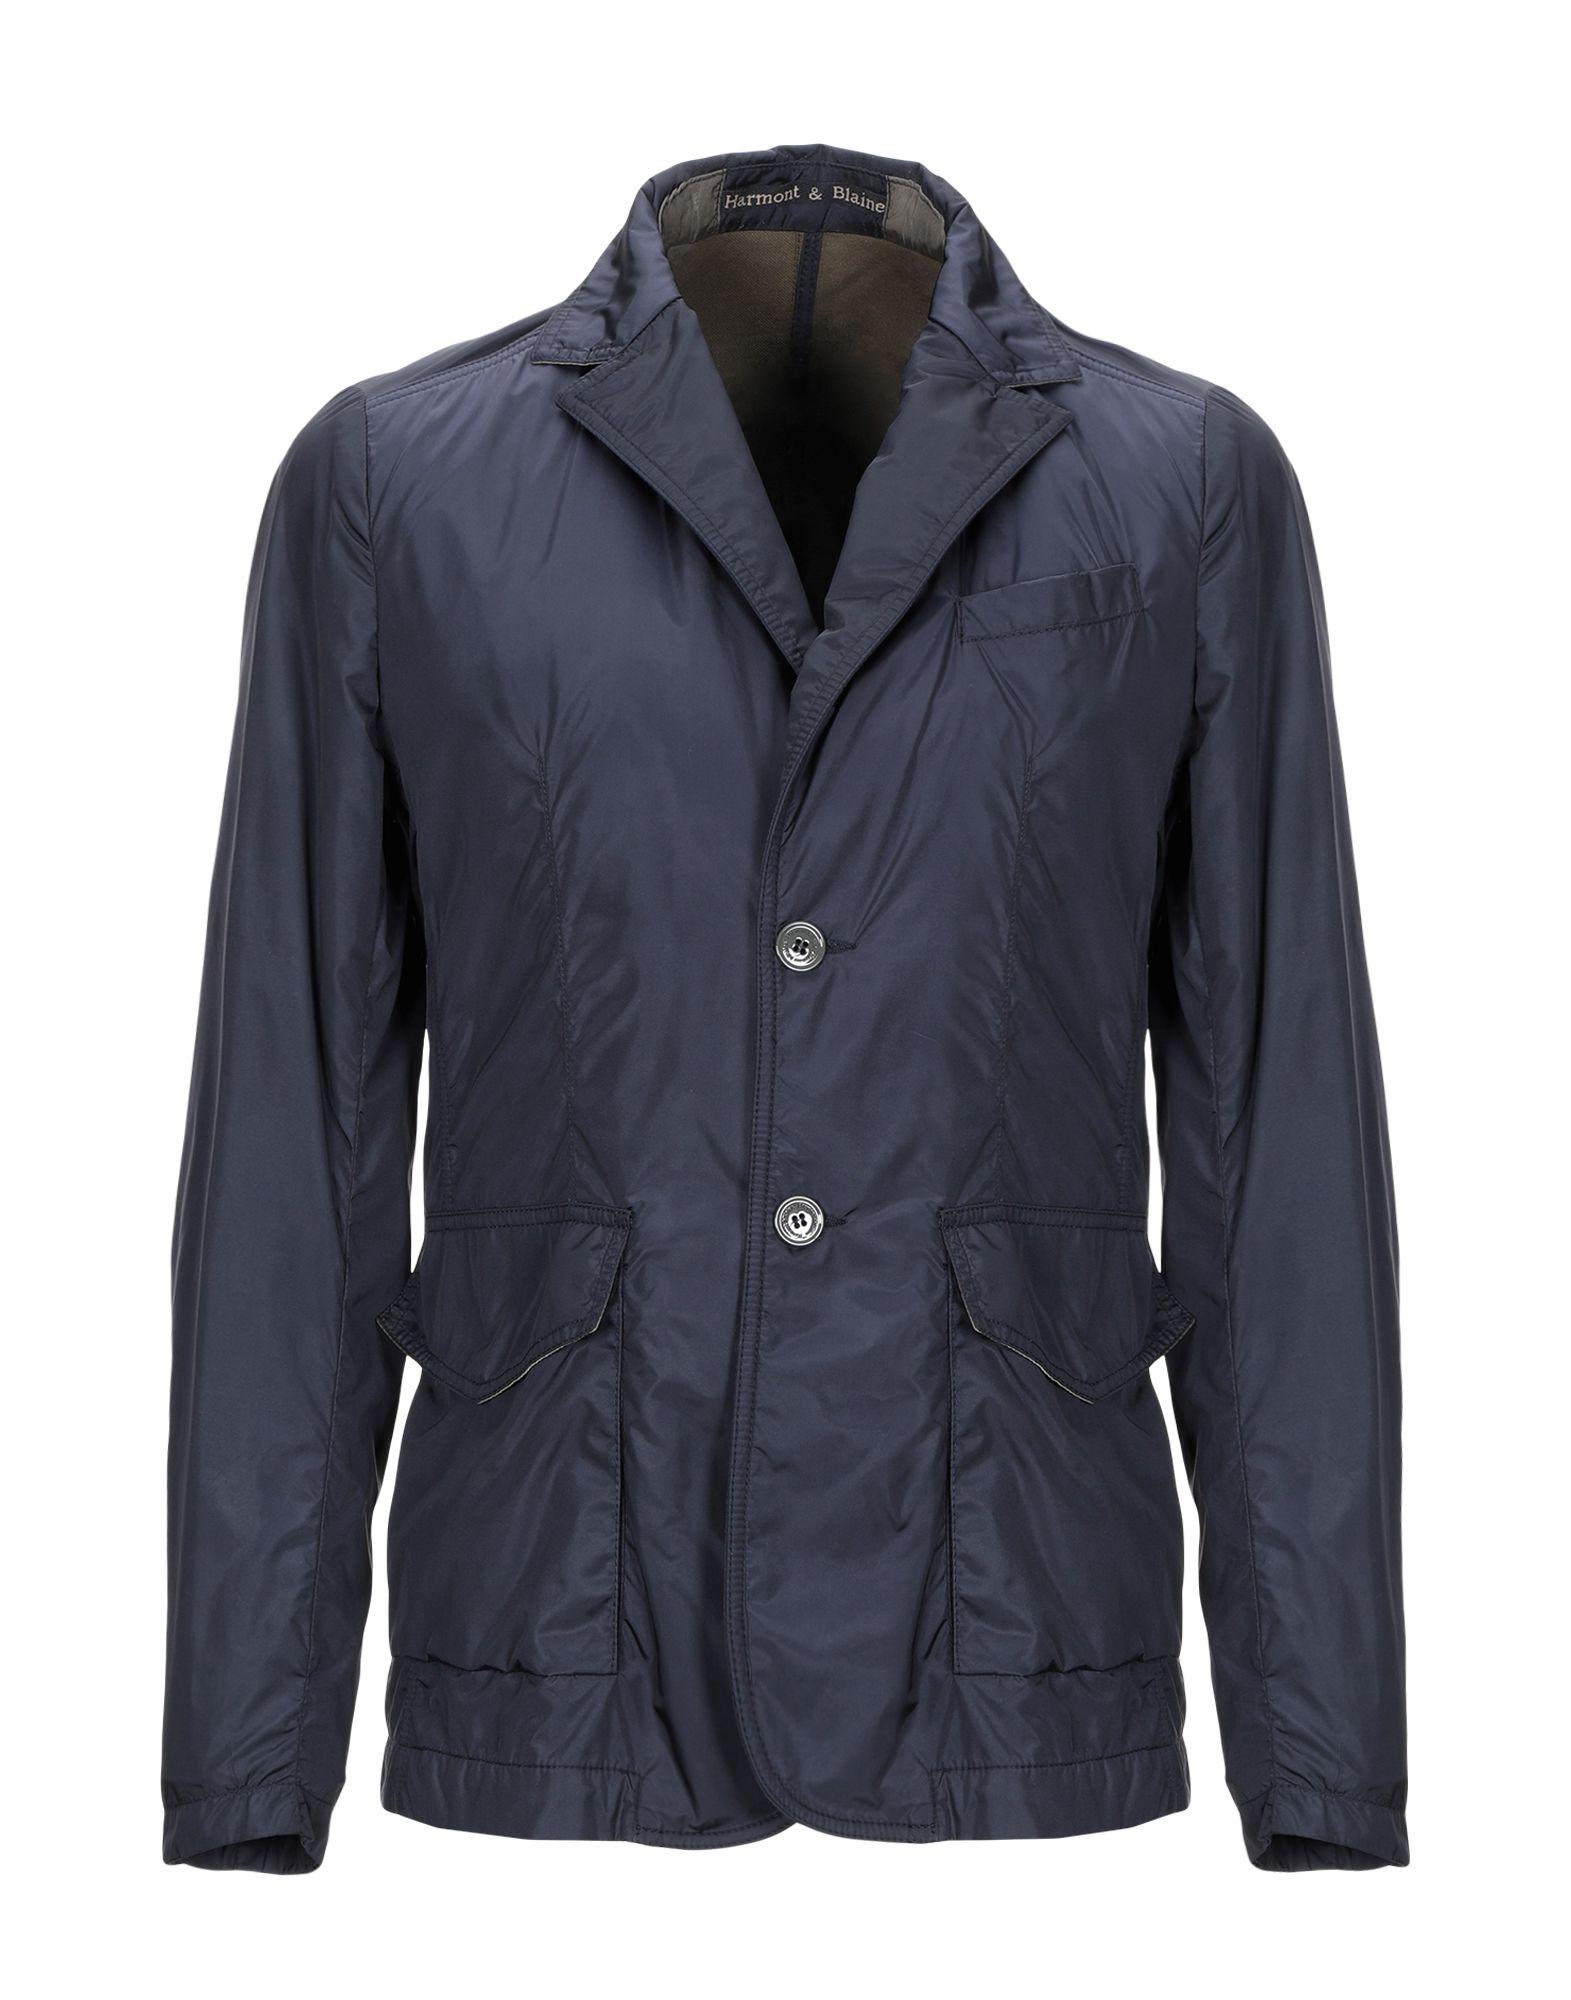 Harmont & Blaine Synthetic Jacket in Dark Blue (Blue) for Men - Lyst